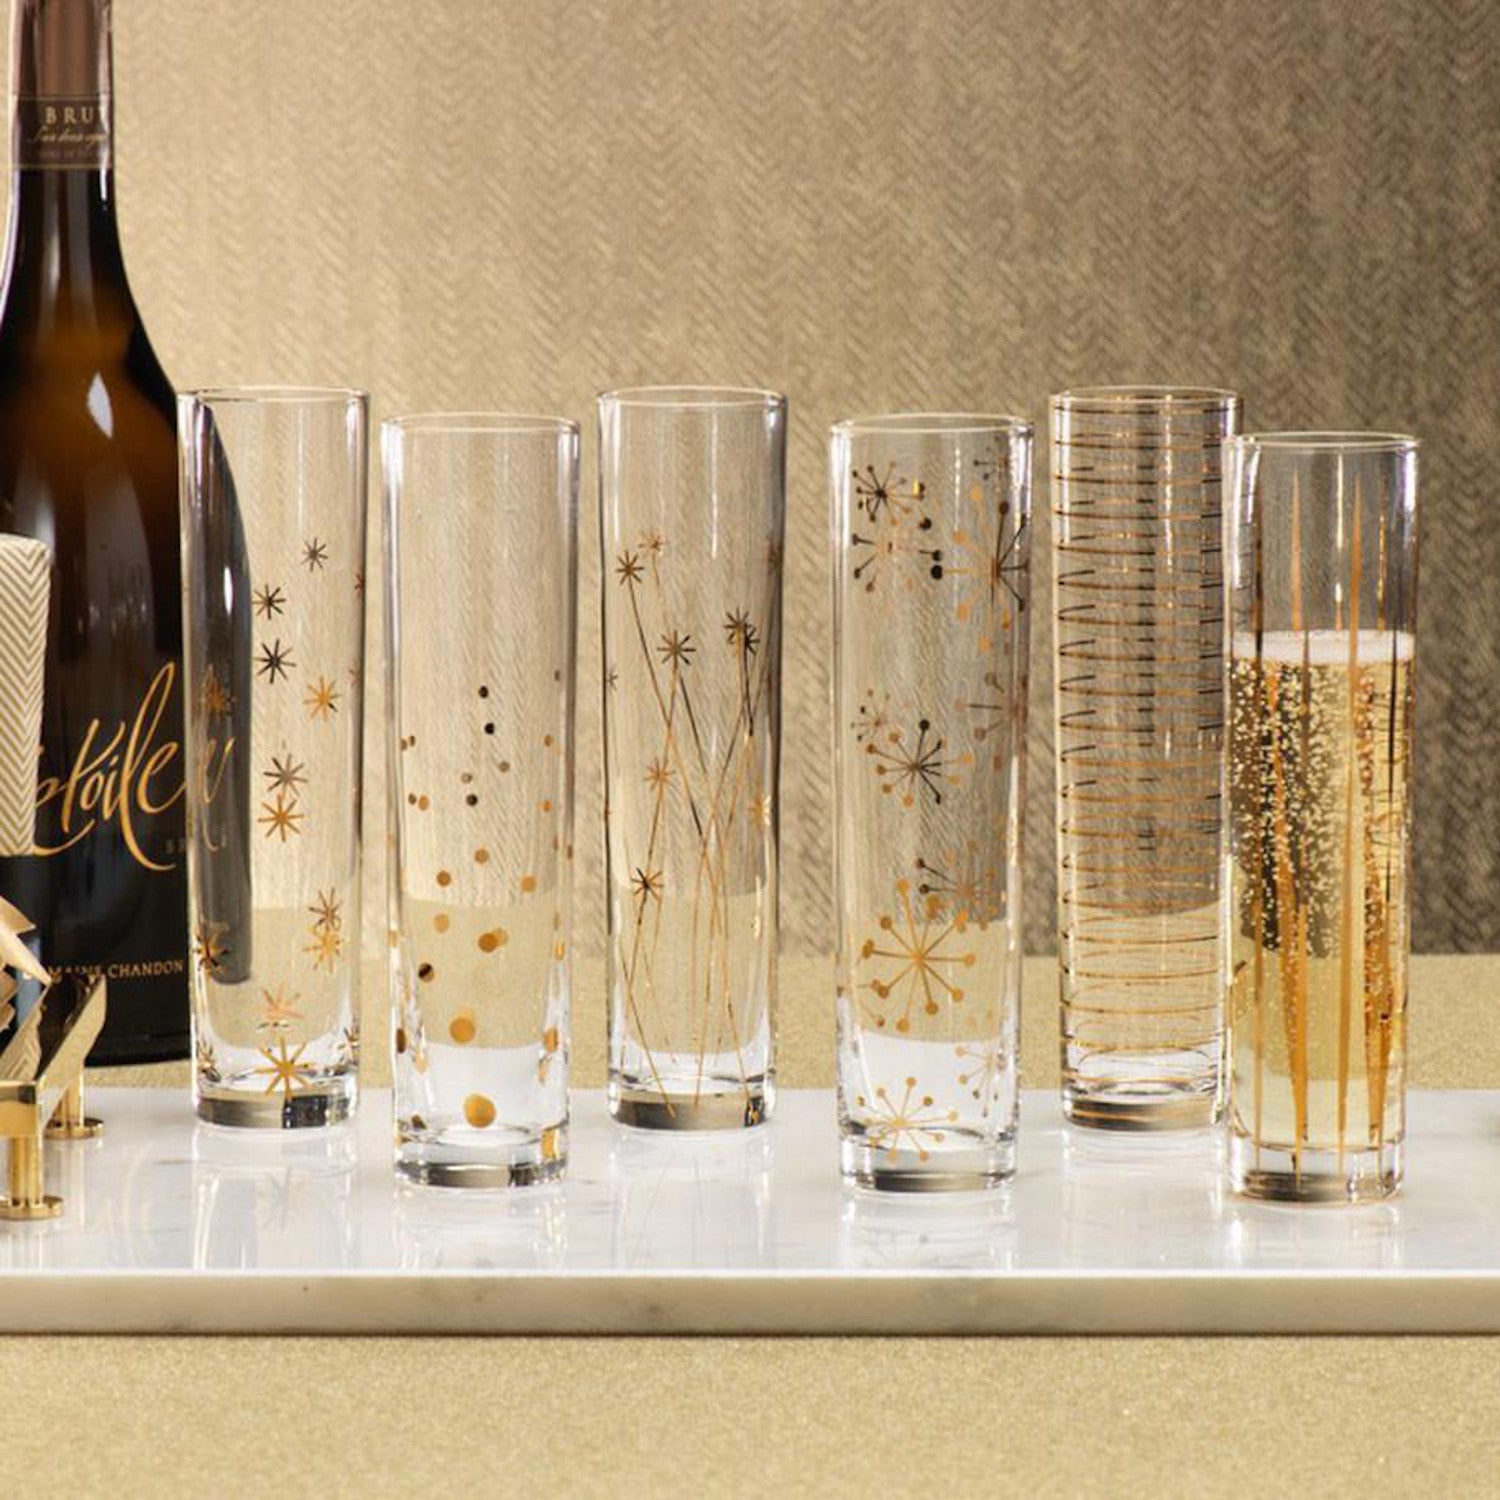 La Fete Golden Champagne Flutes, Set of 6 assorted